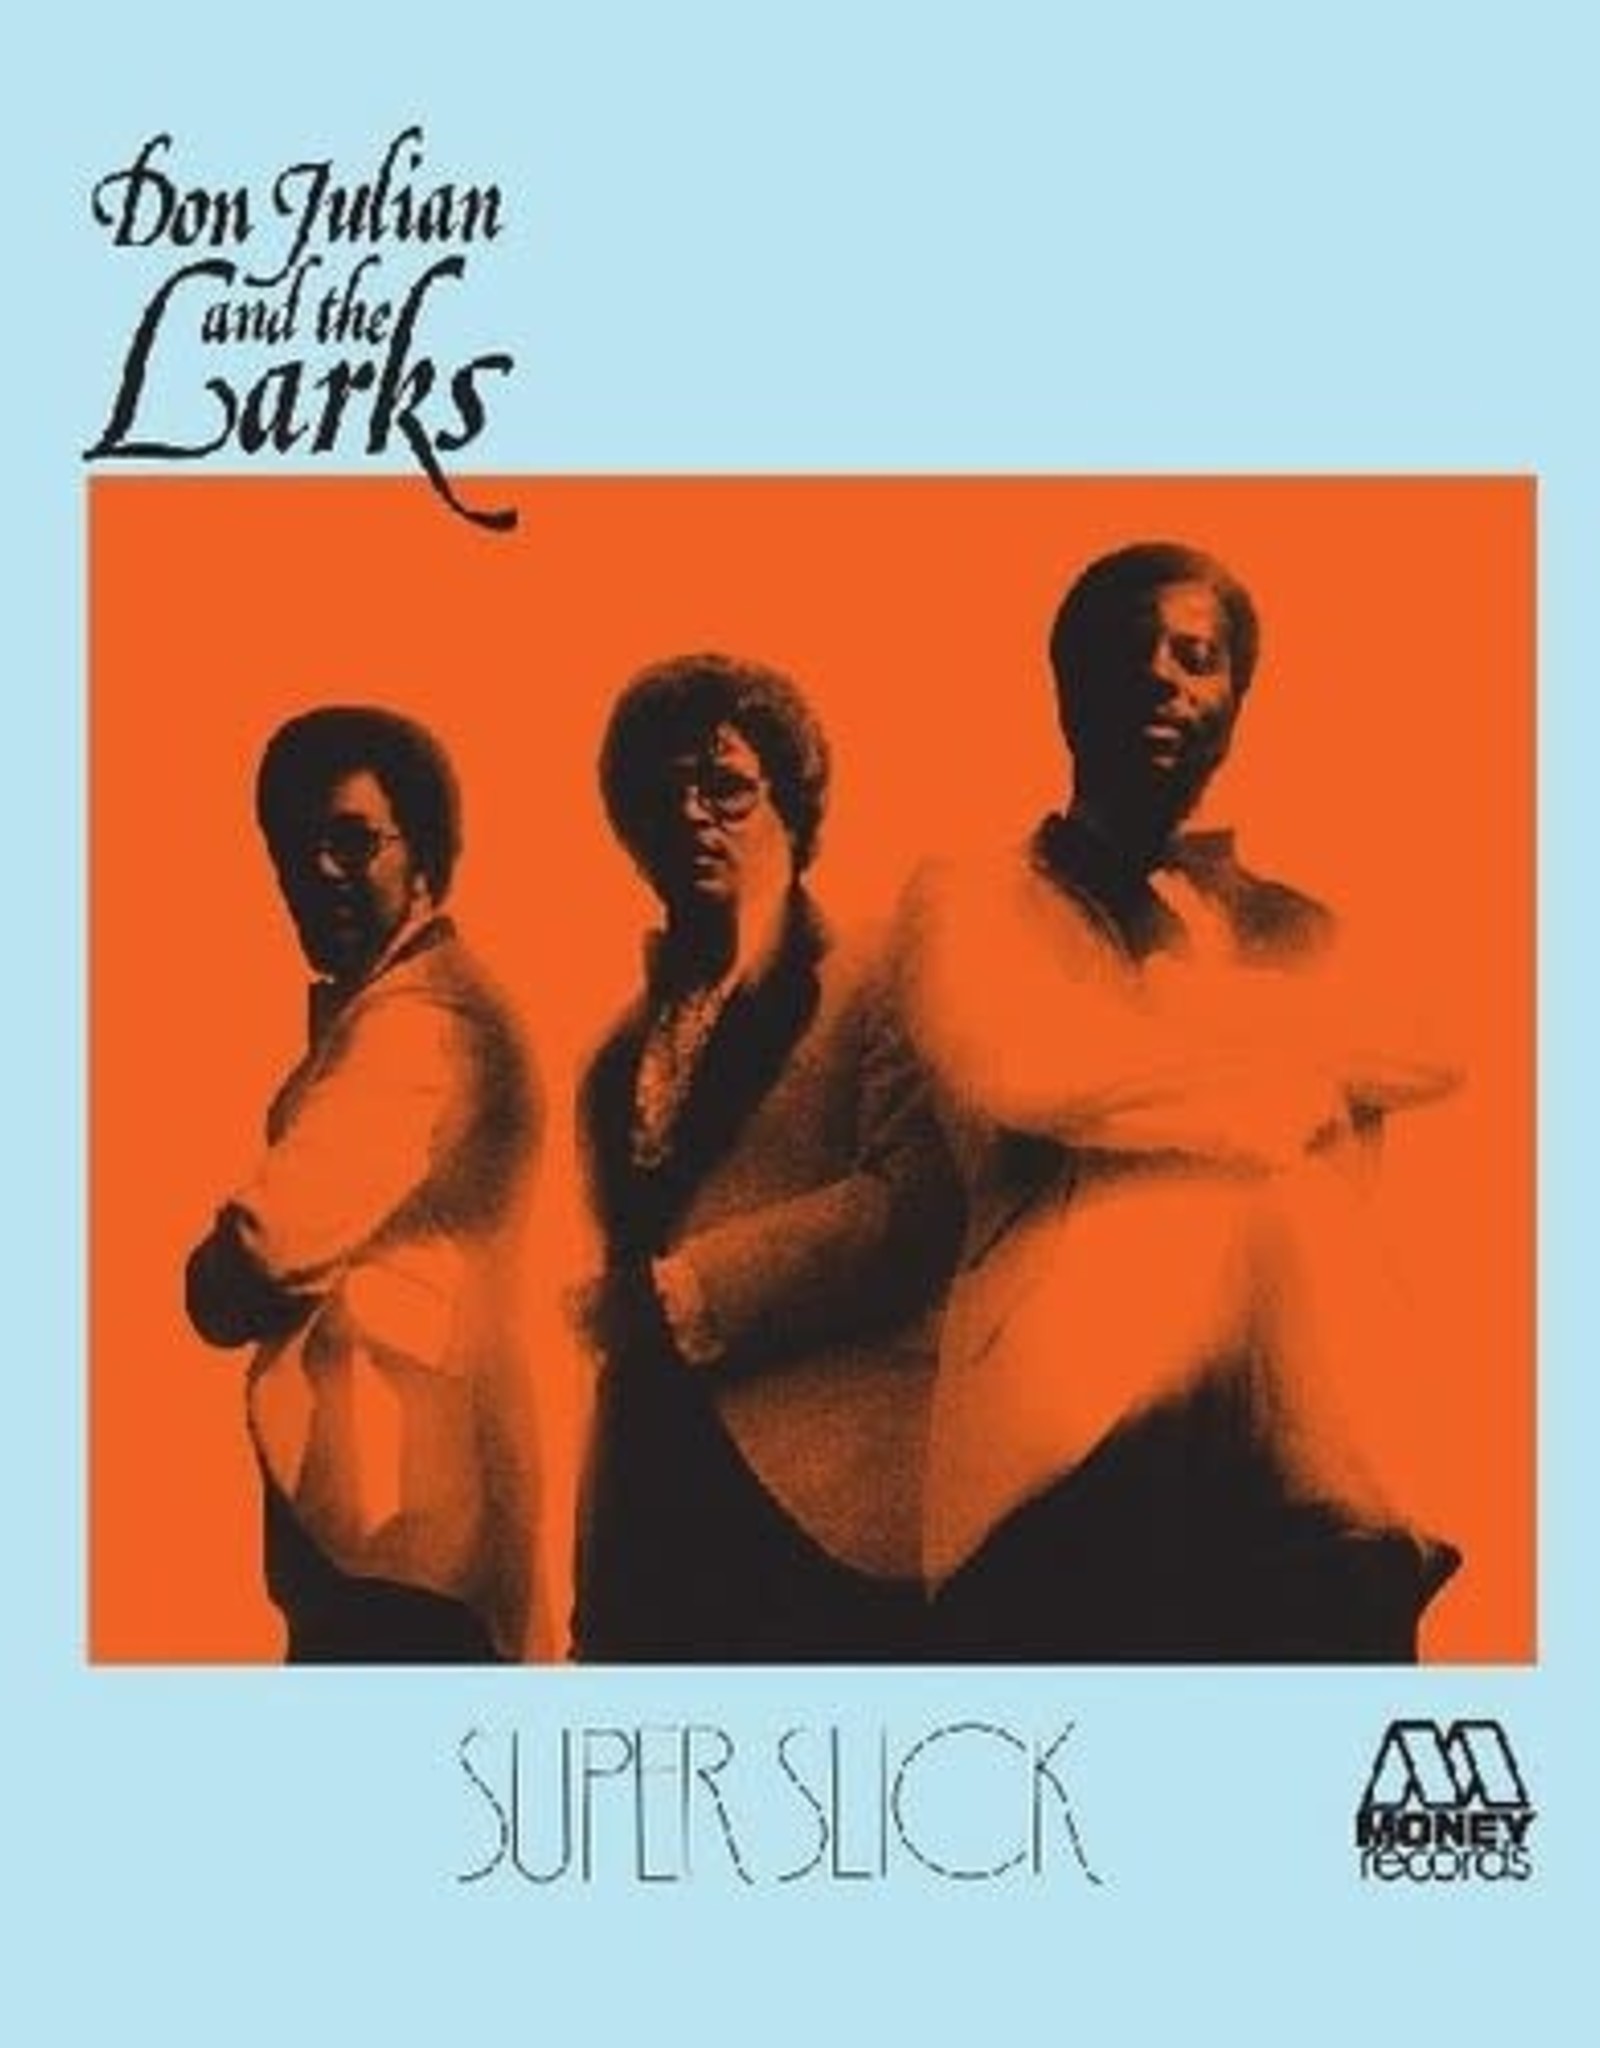 Don Julian and the Larks - Super Slick (Blue Vinyl)